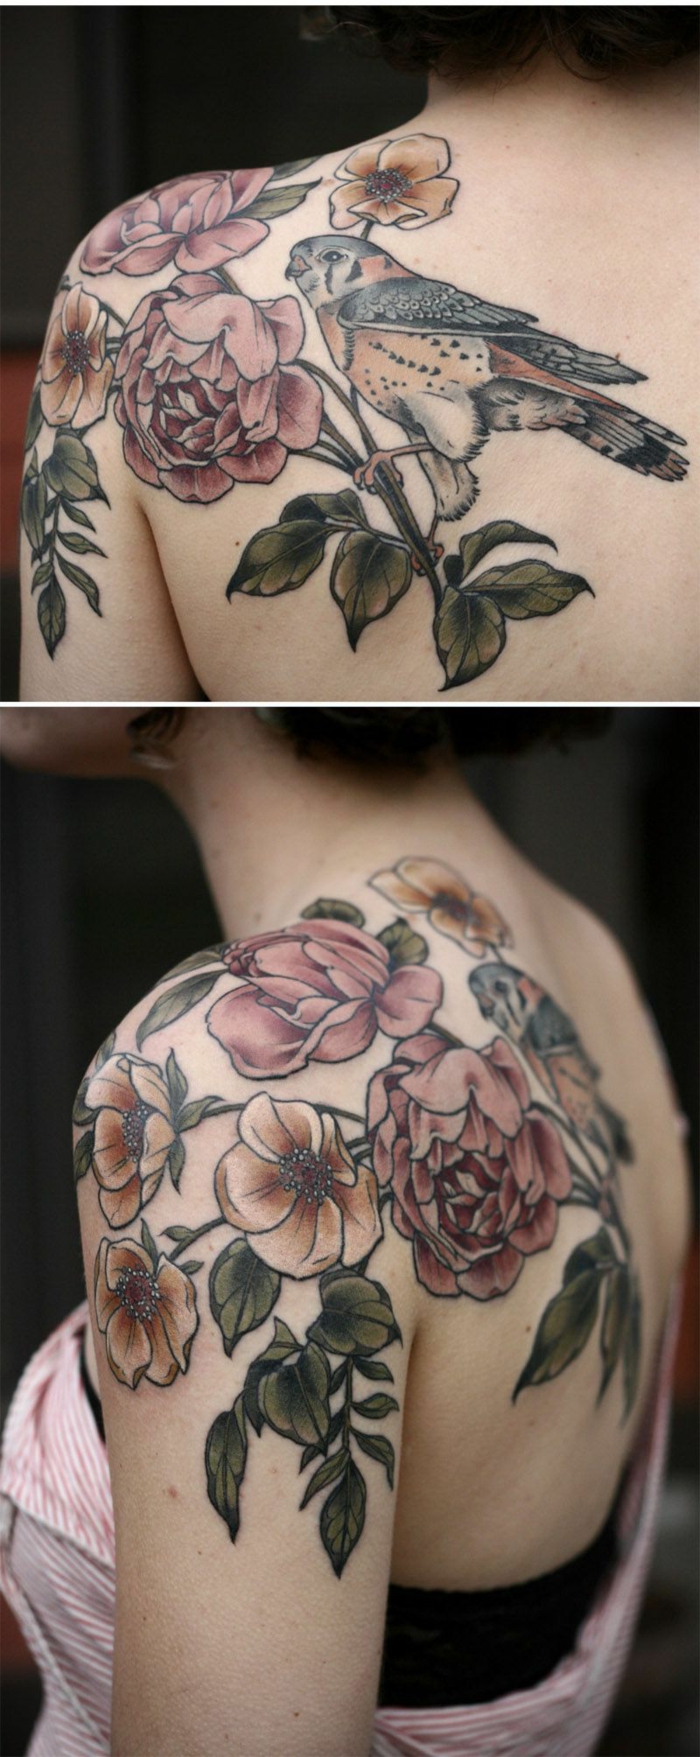 tatuajes tradicionales con motivos florales,grande tatuaje en la espalda, tattoo con peonias, tatujes old school golondrinas